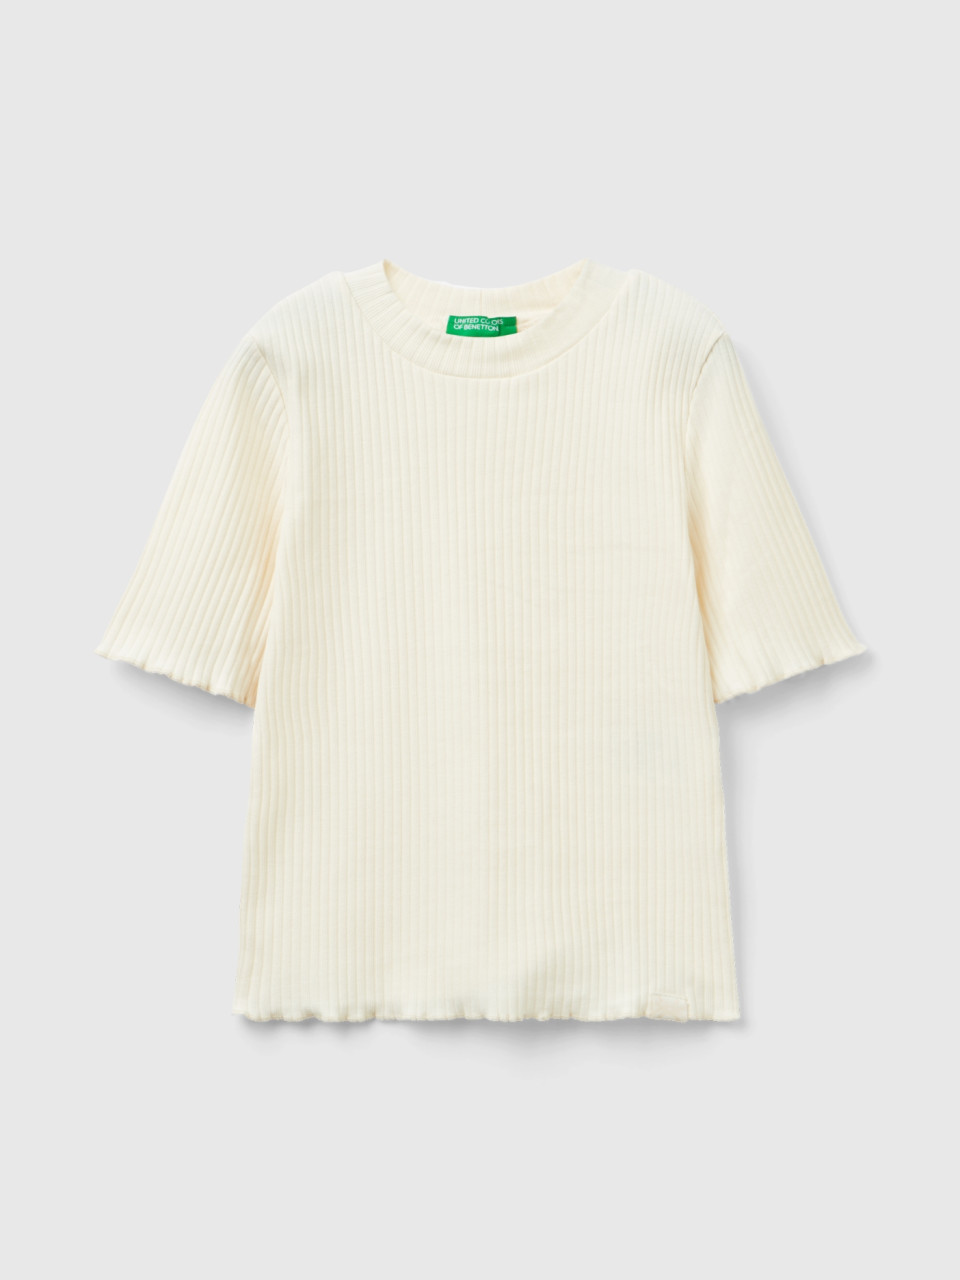 Benetton, Short Sleeve Turtleneck T-shirt, Creamy White, Kids